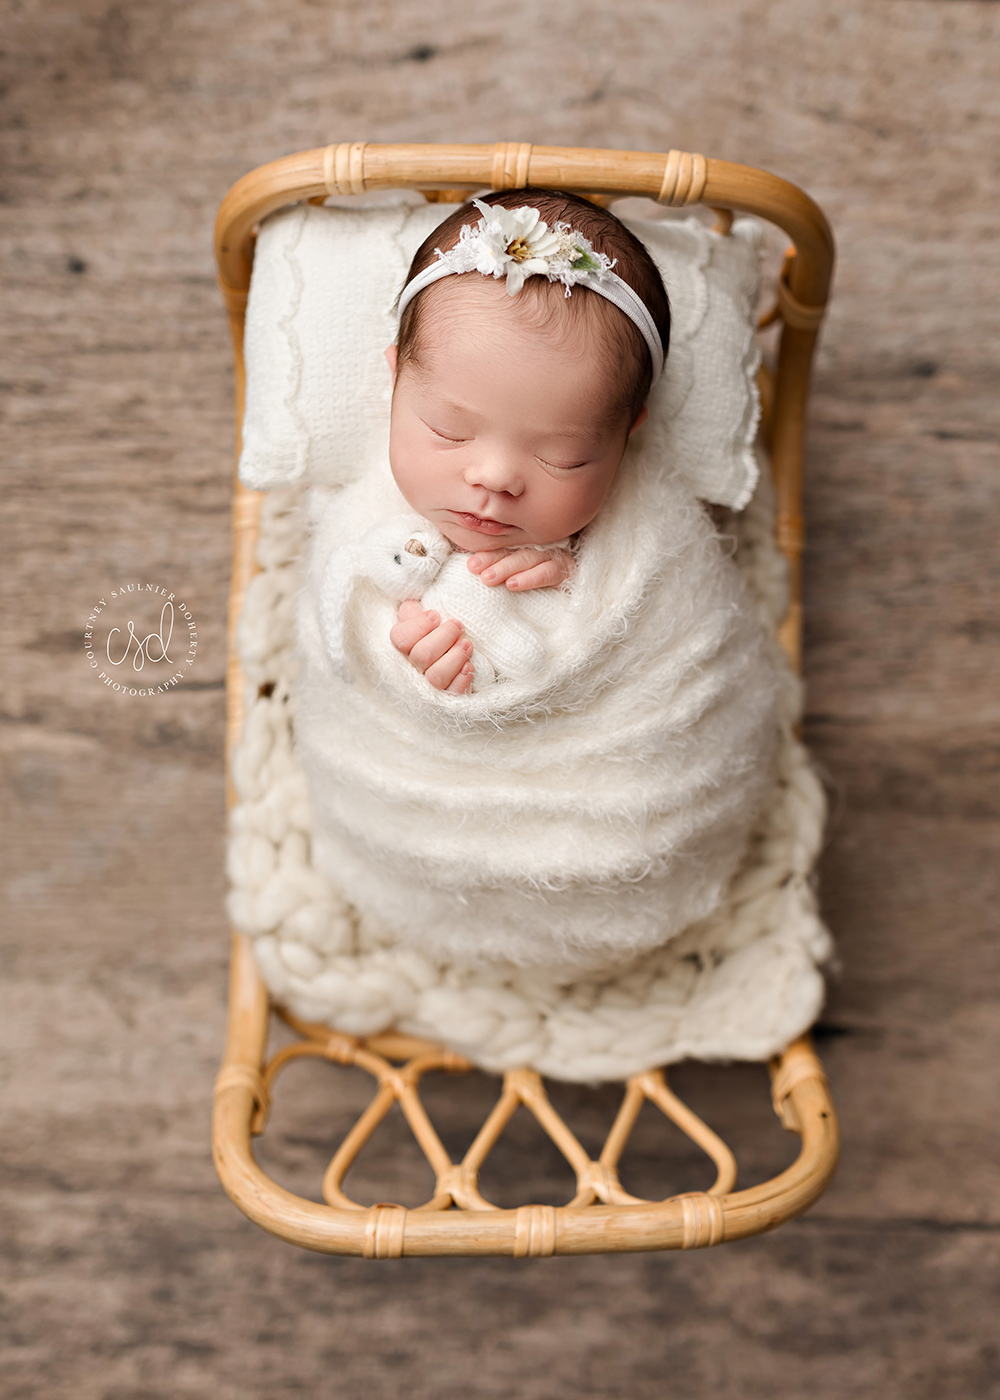 Newborn Baby Session, newborn photographer Walpole MA, baby photography studio